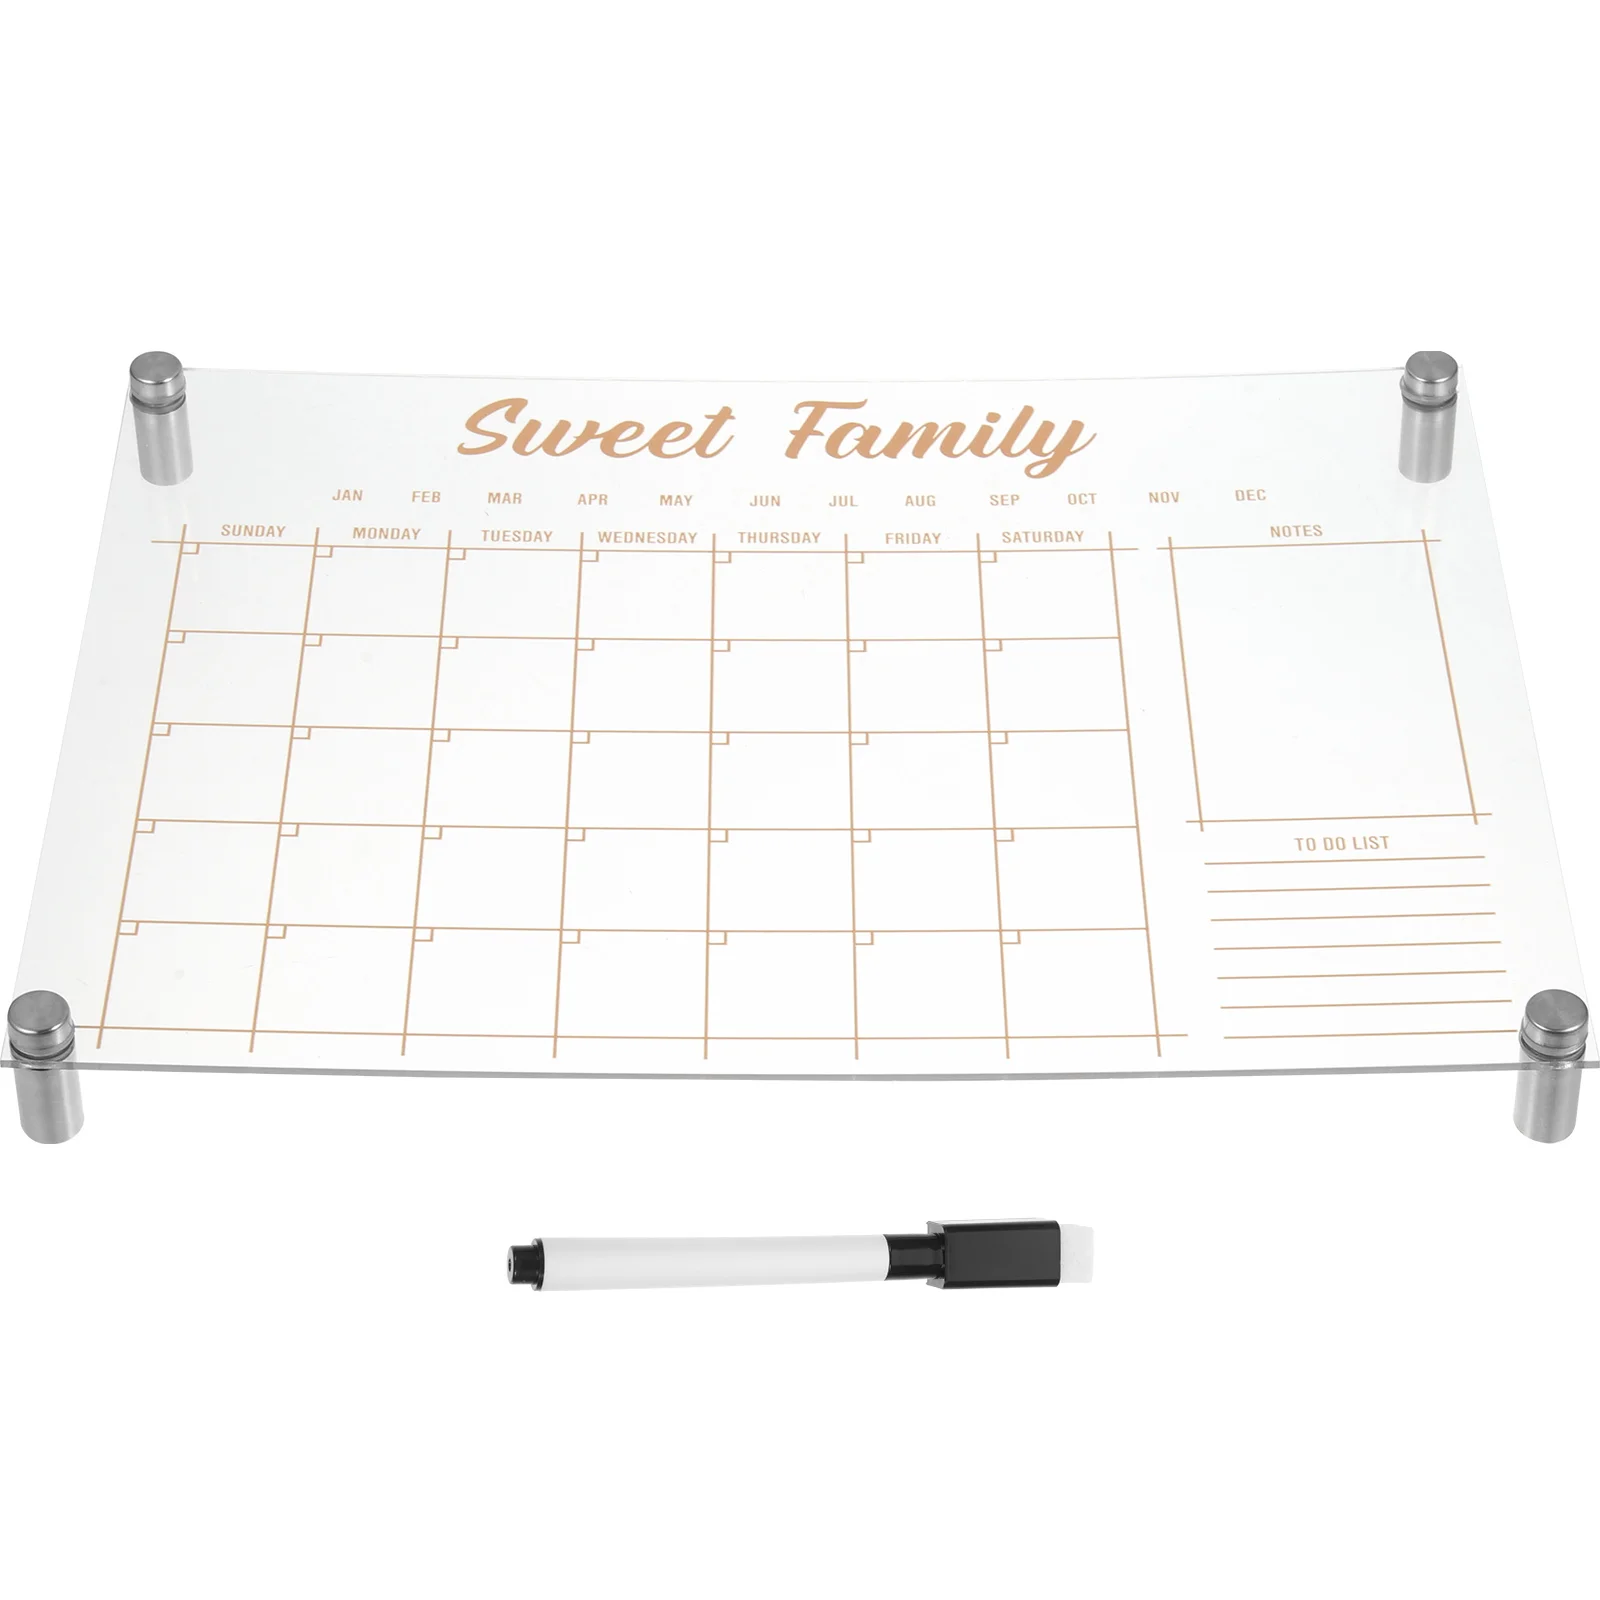 

Board Weekly Dry Calendar Erase Planner Whiteboard Fridge Acrylic Wall White Menu Memo Desk Schedule Plan Monthly List